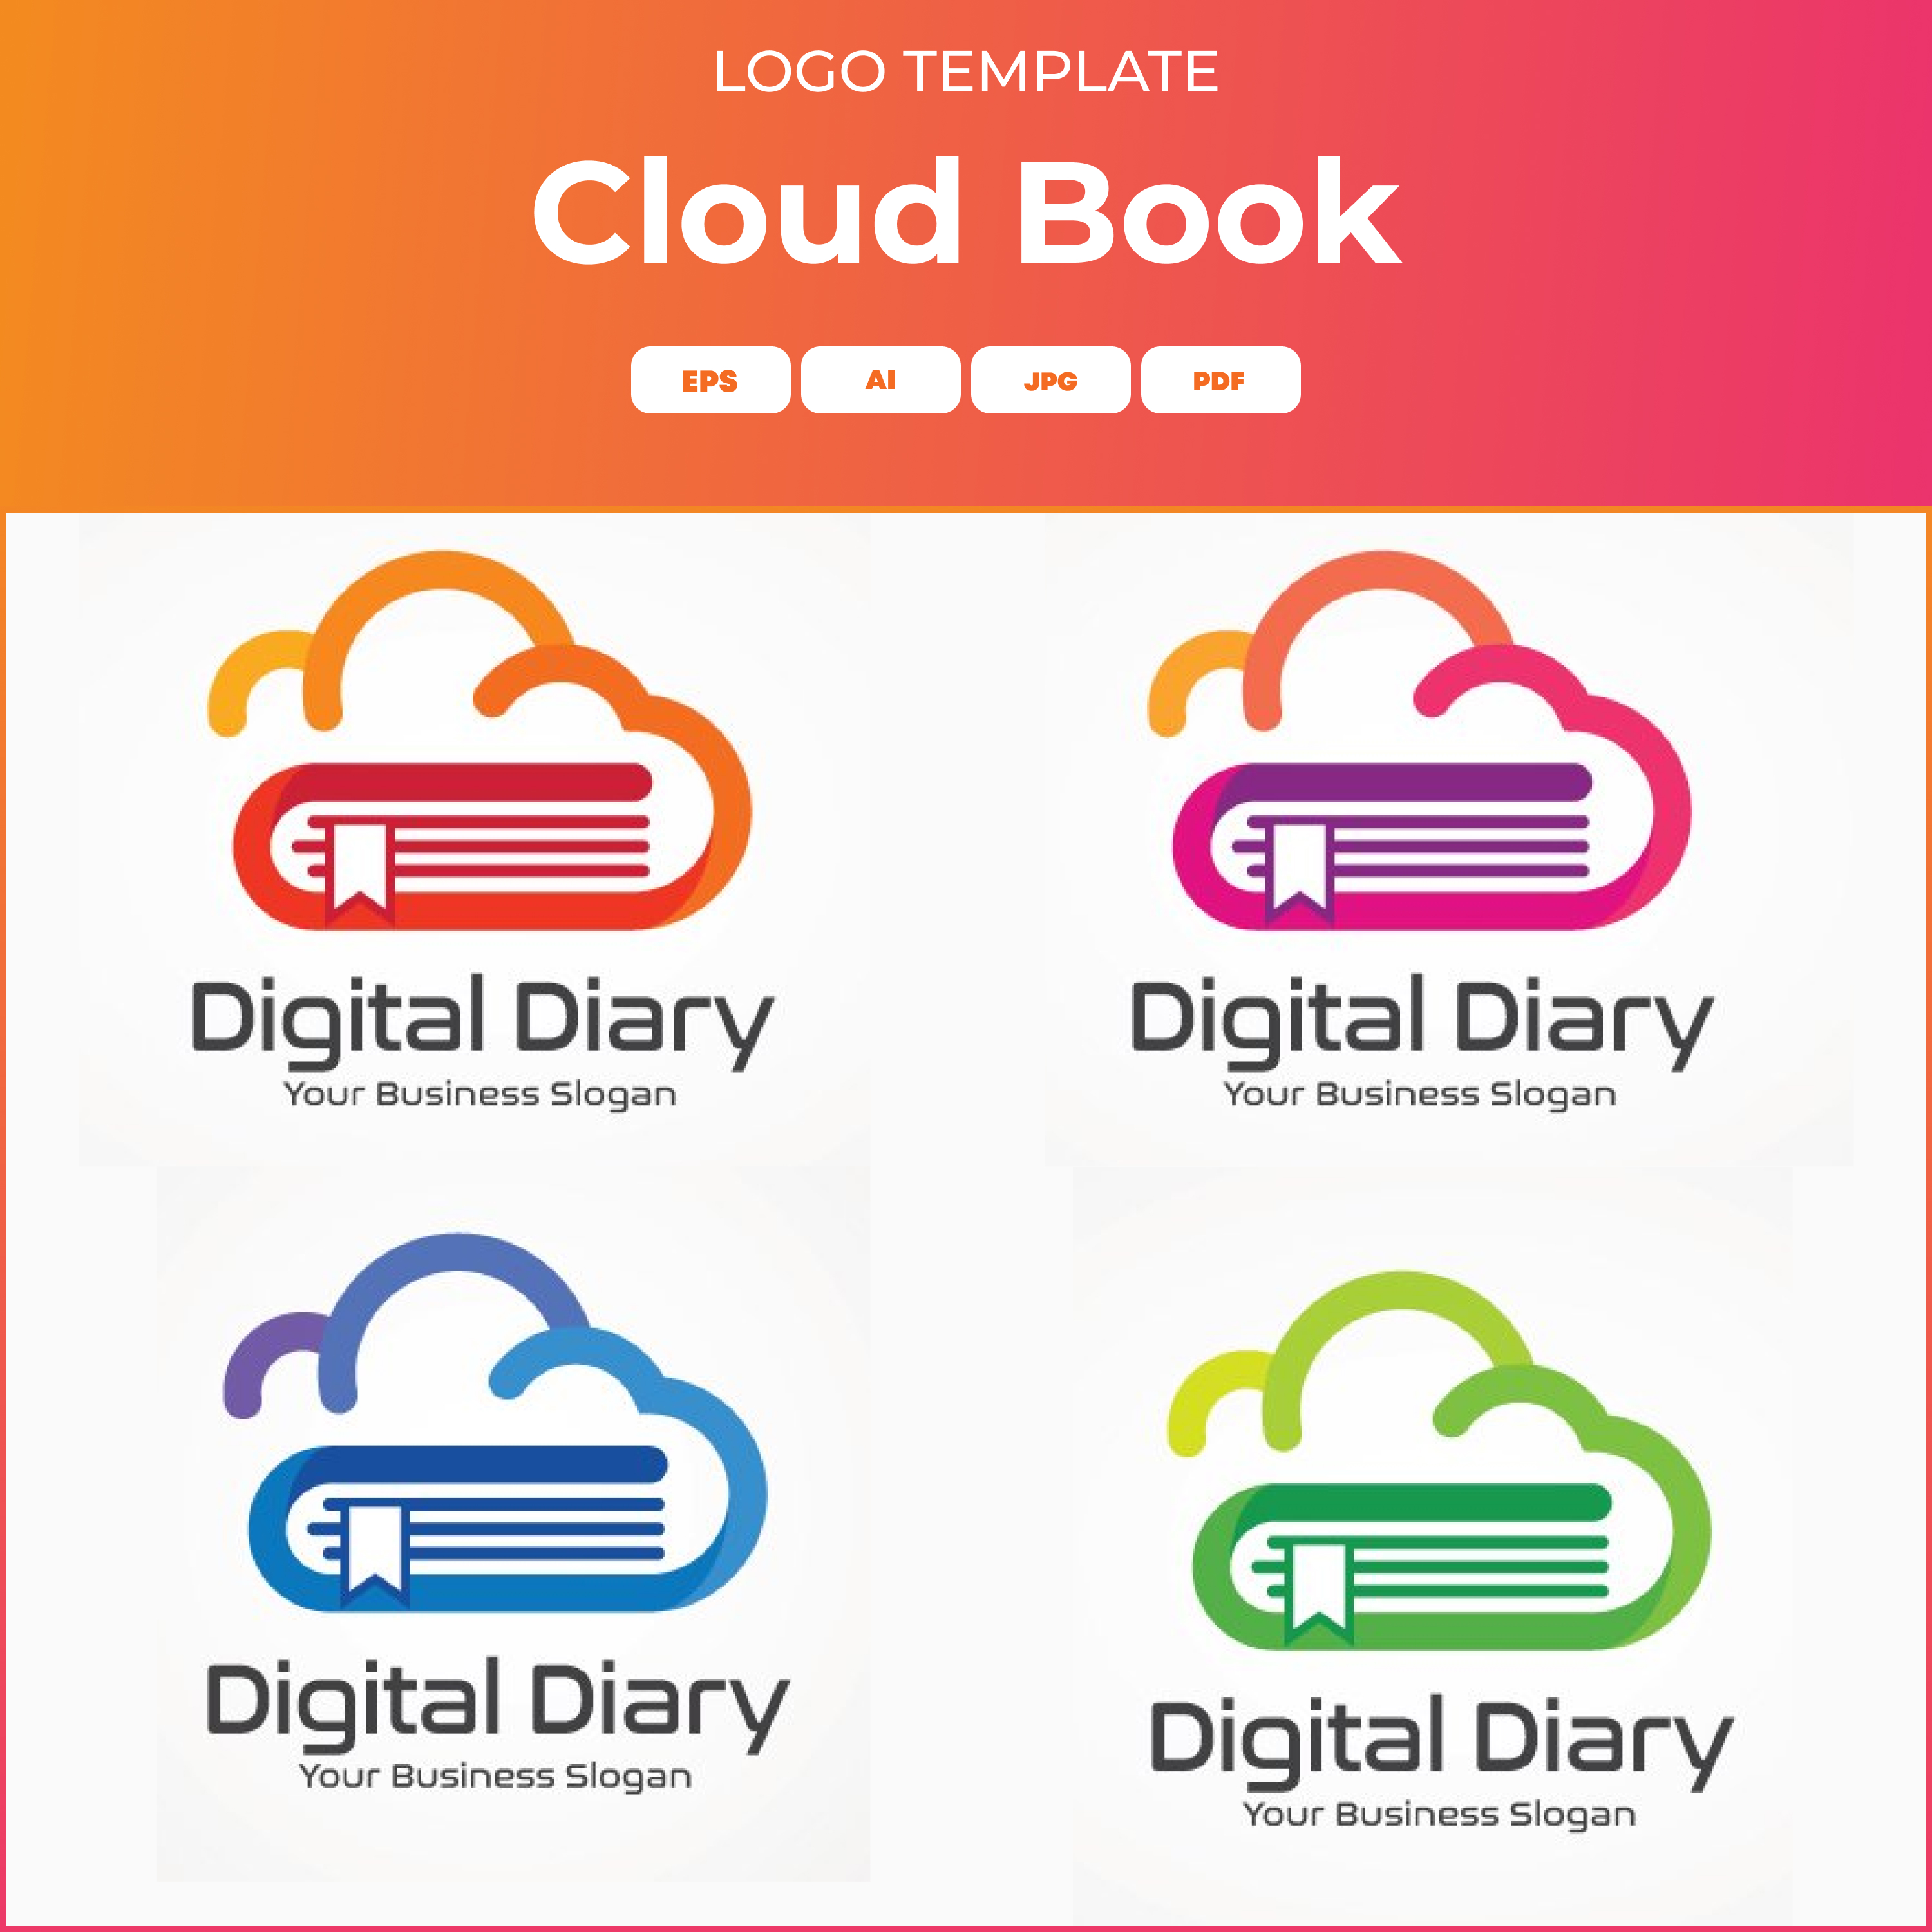 Prints of cloud book logo template.